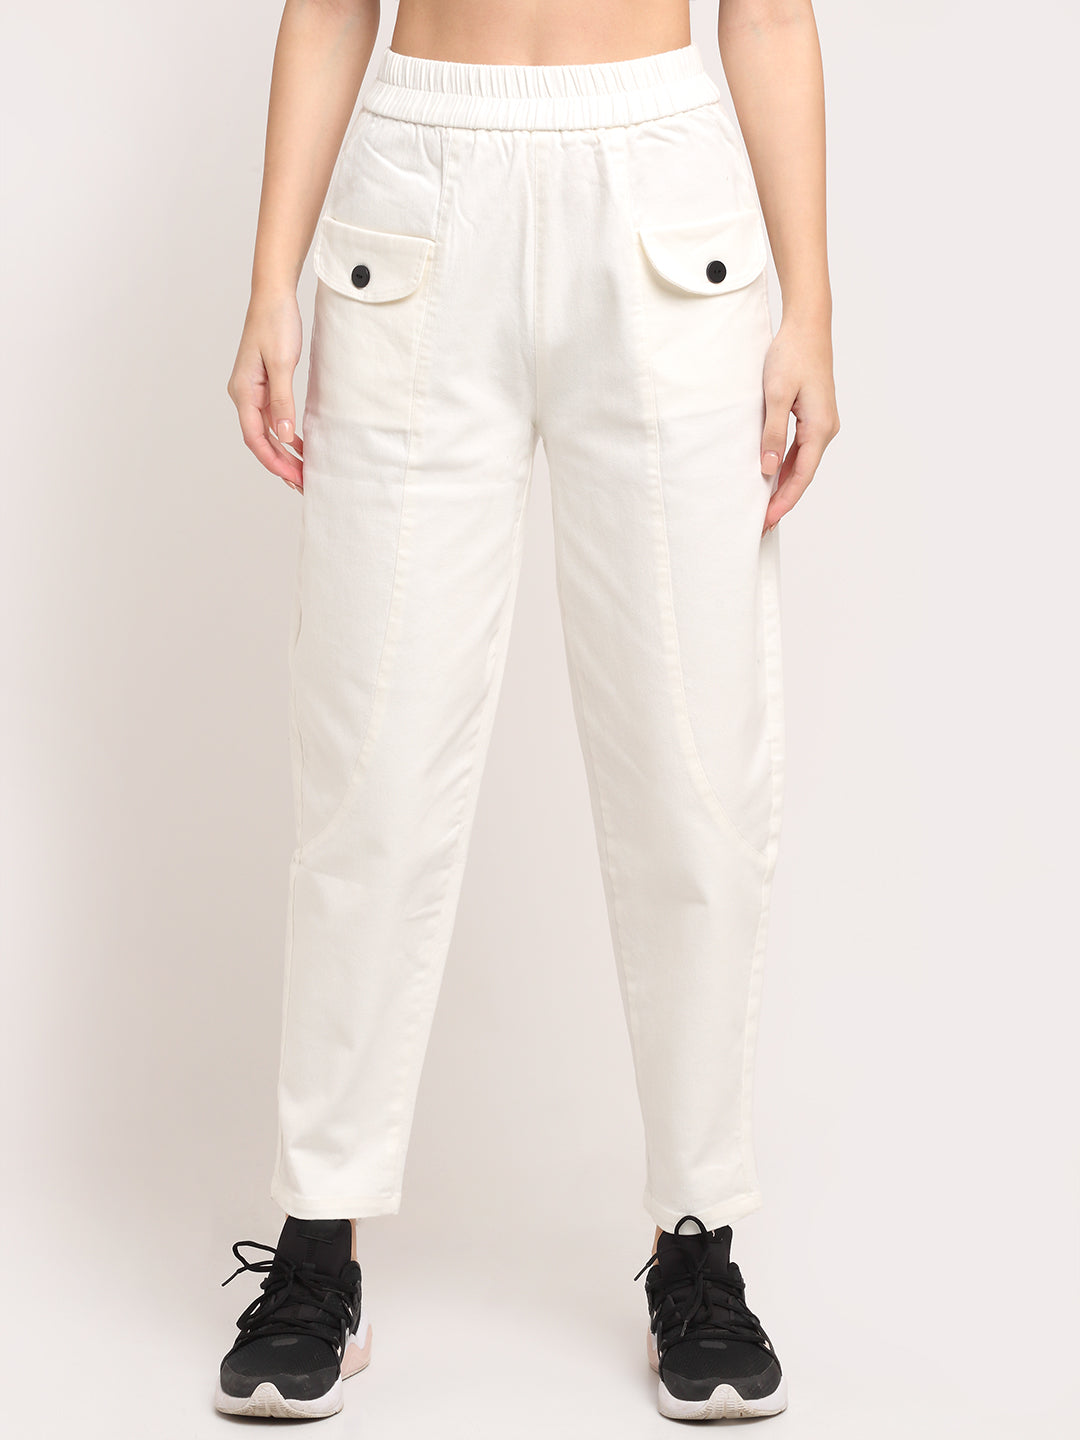 White Cotton Solid Trouser